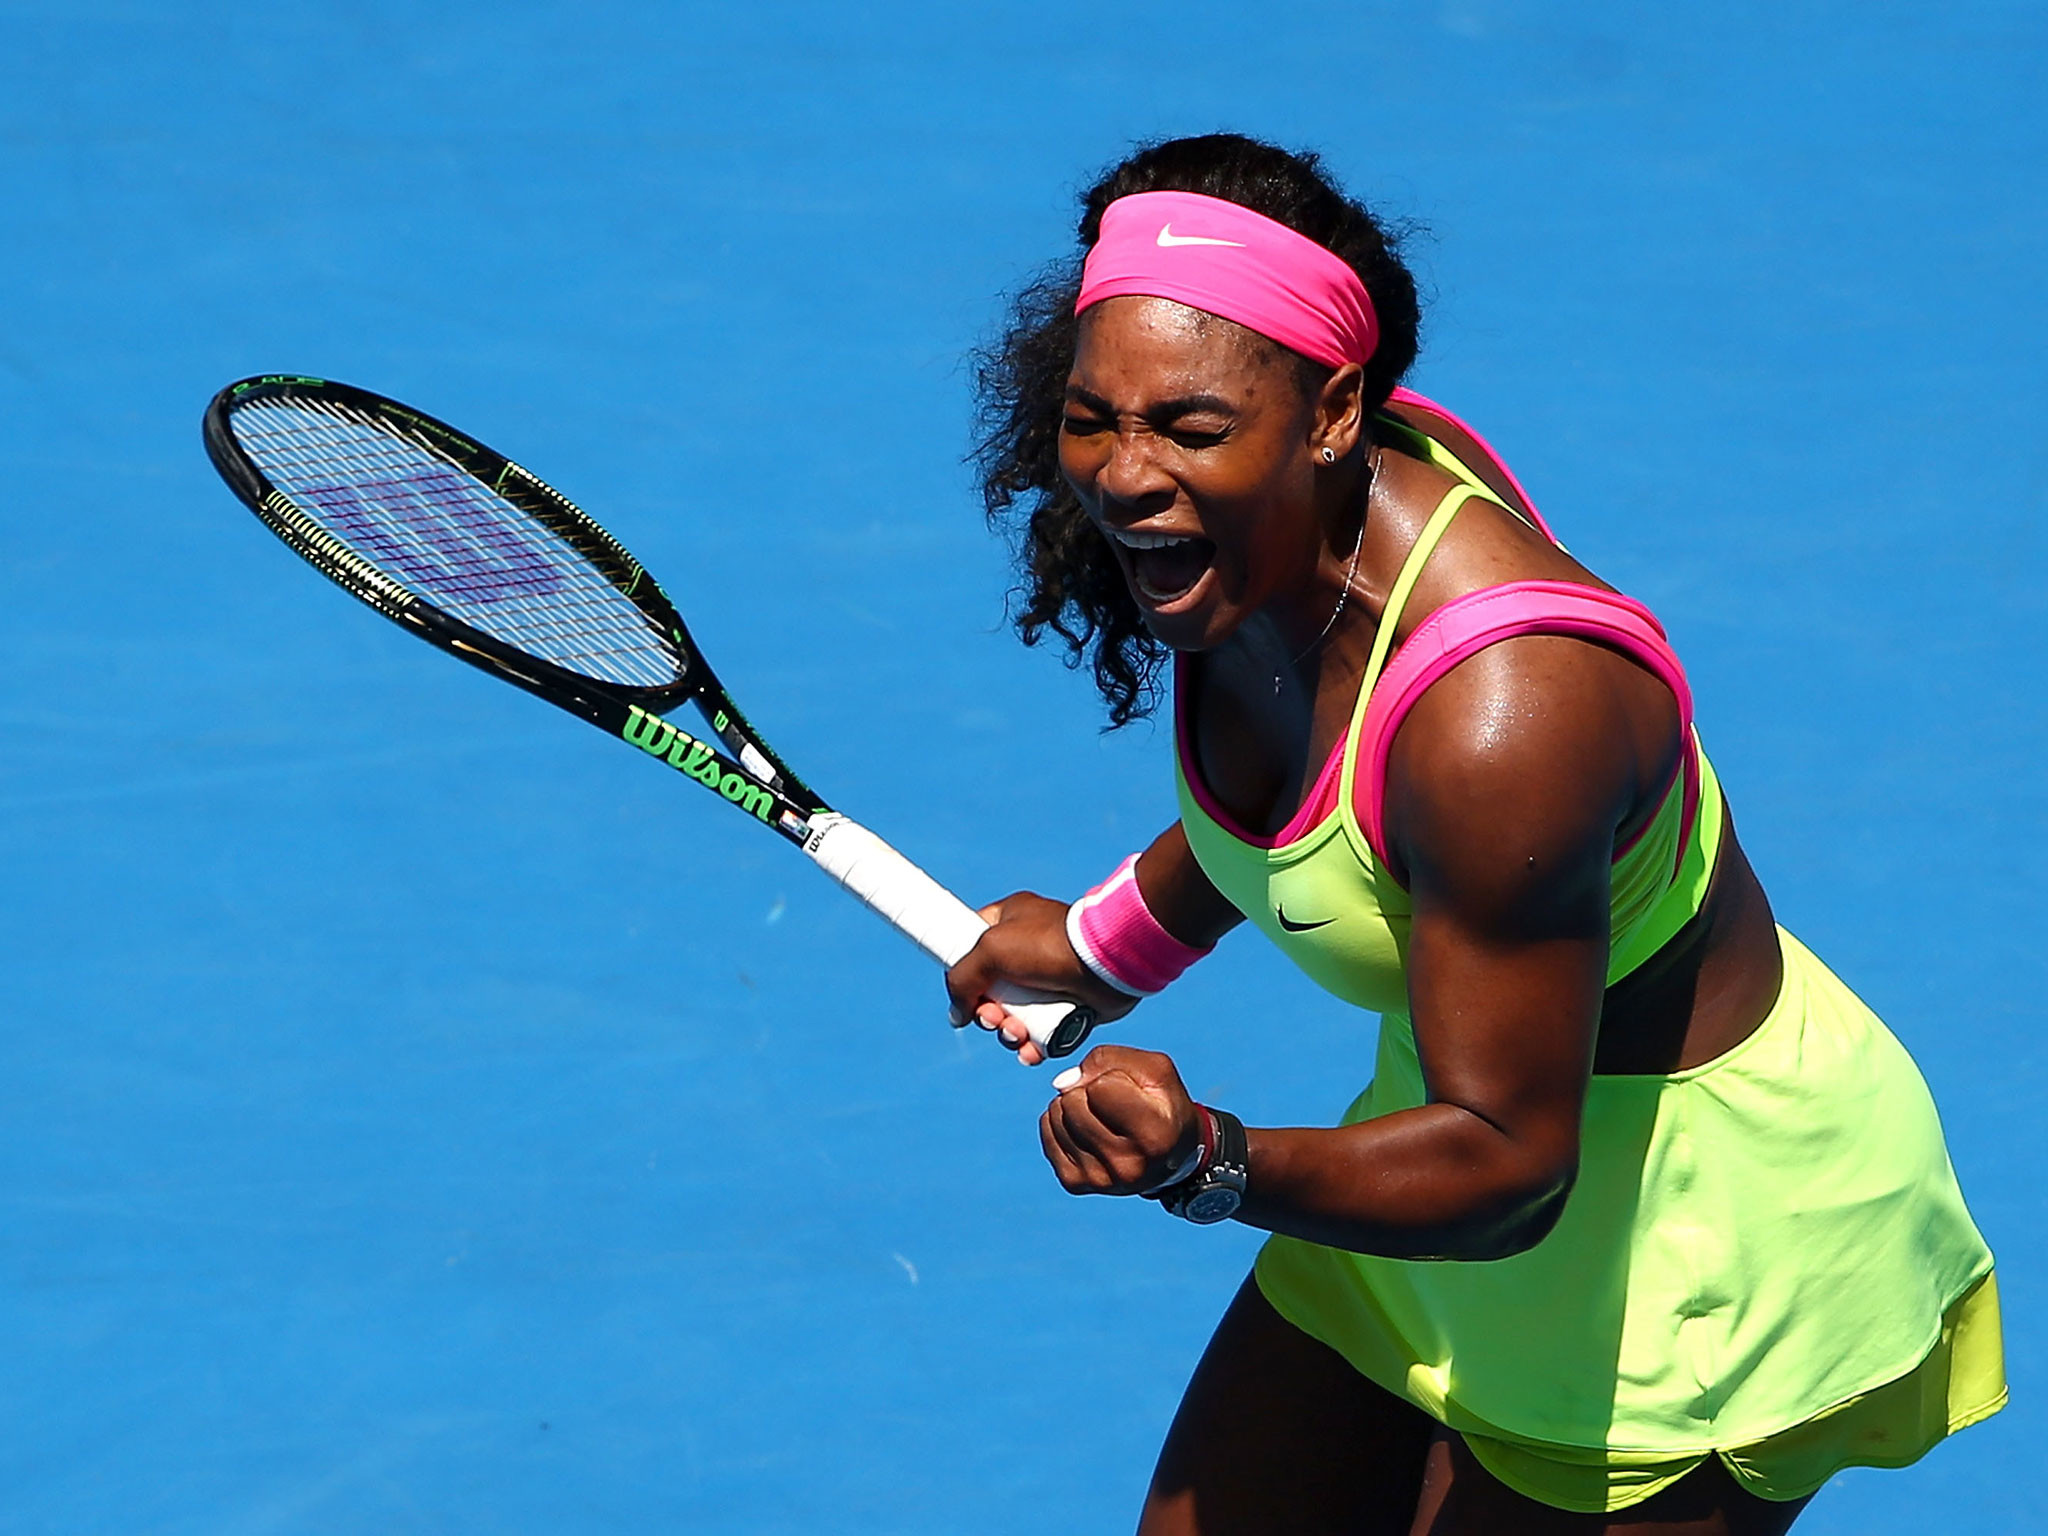 2048x1536 Australian Open 2015: Serena Williams vs Garbine Muguruza match preview |  The Independent